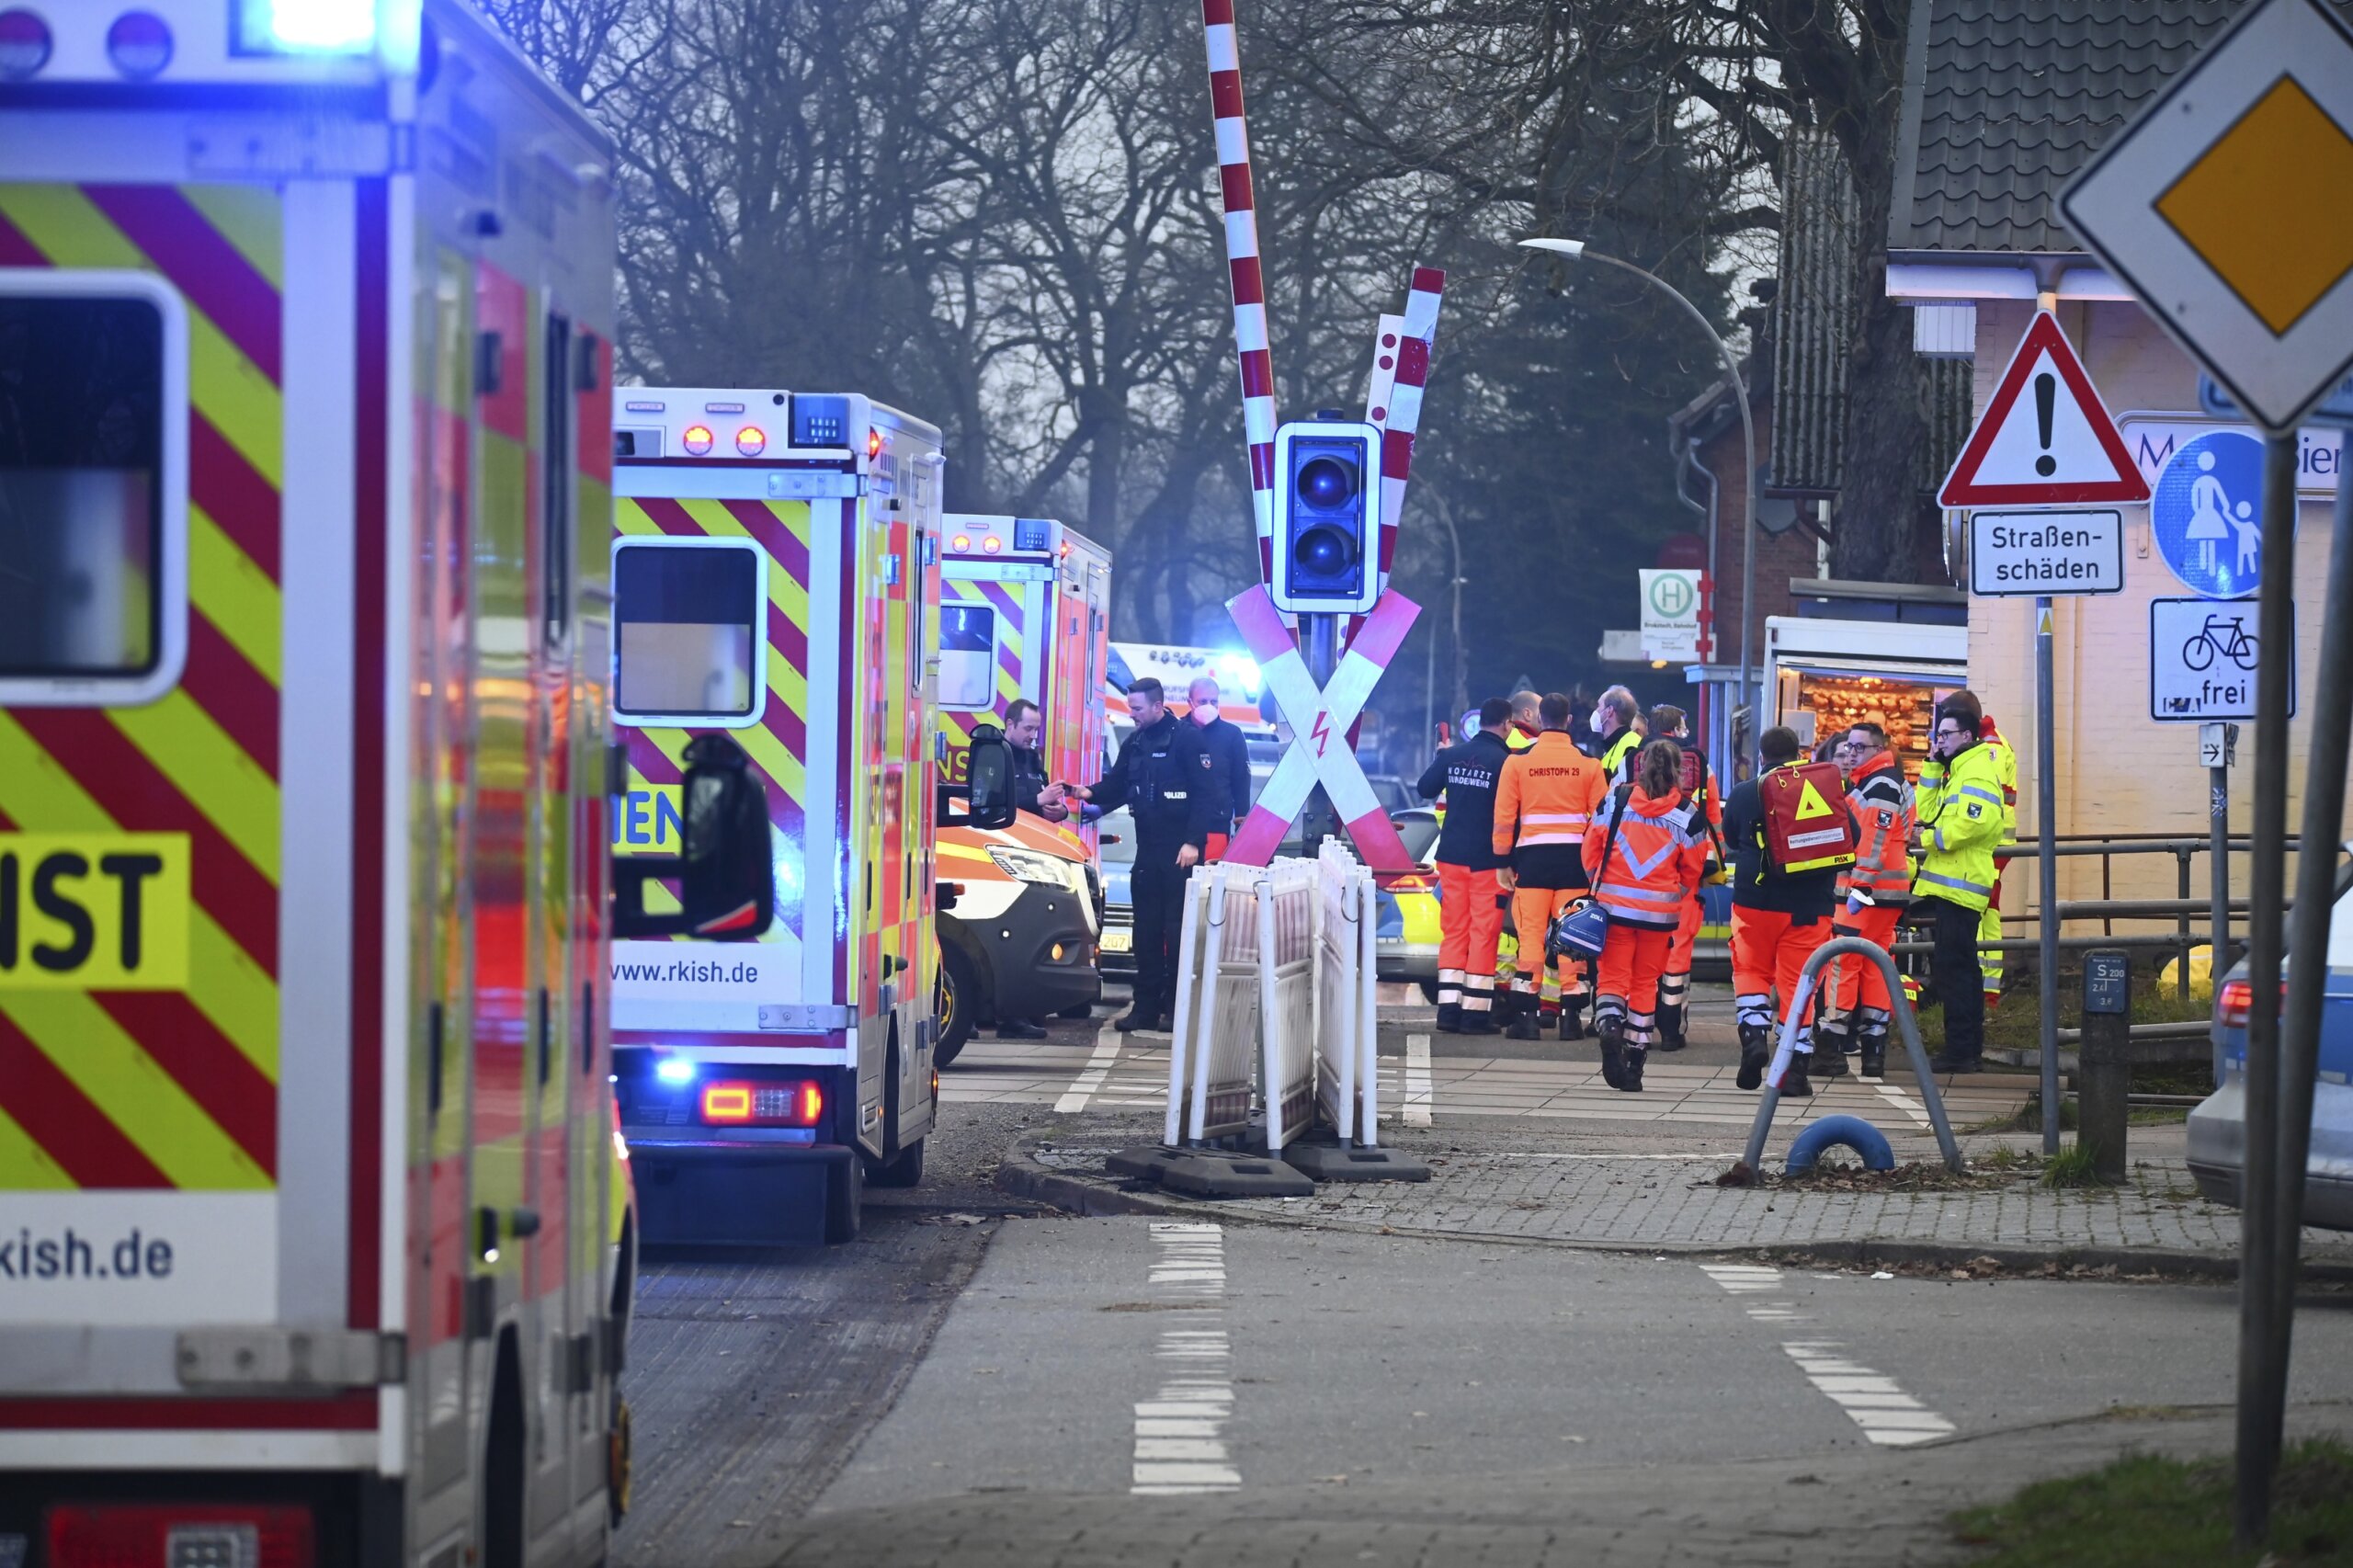 Man stabs, injures several passengers on German train